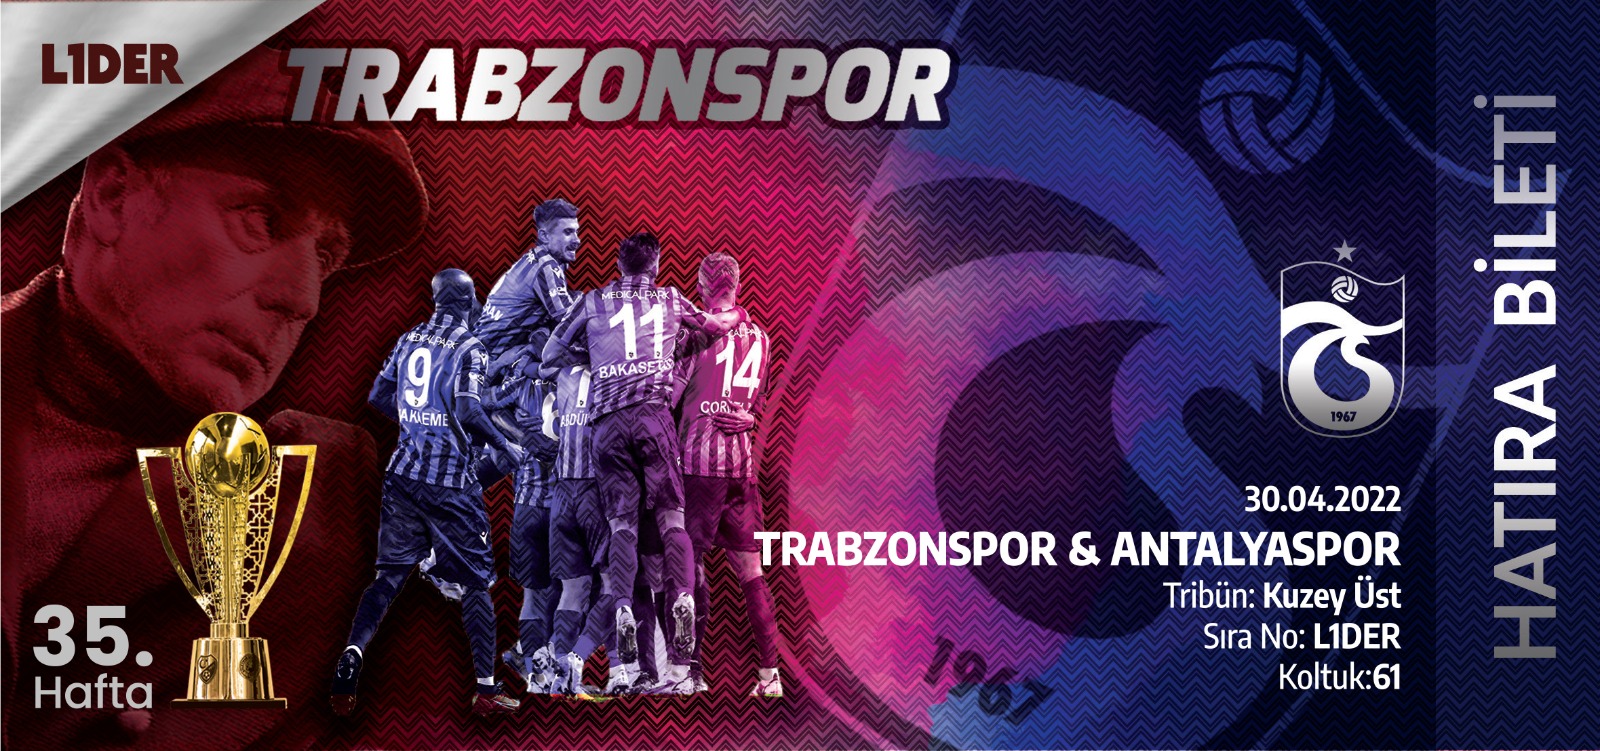 Trabzonspor-Antalyaspor Anı Bileti 